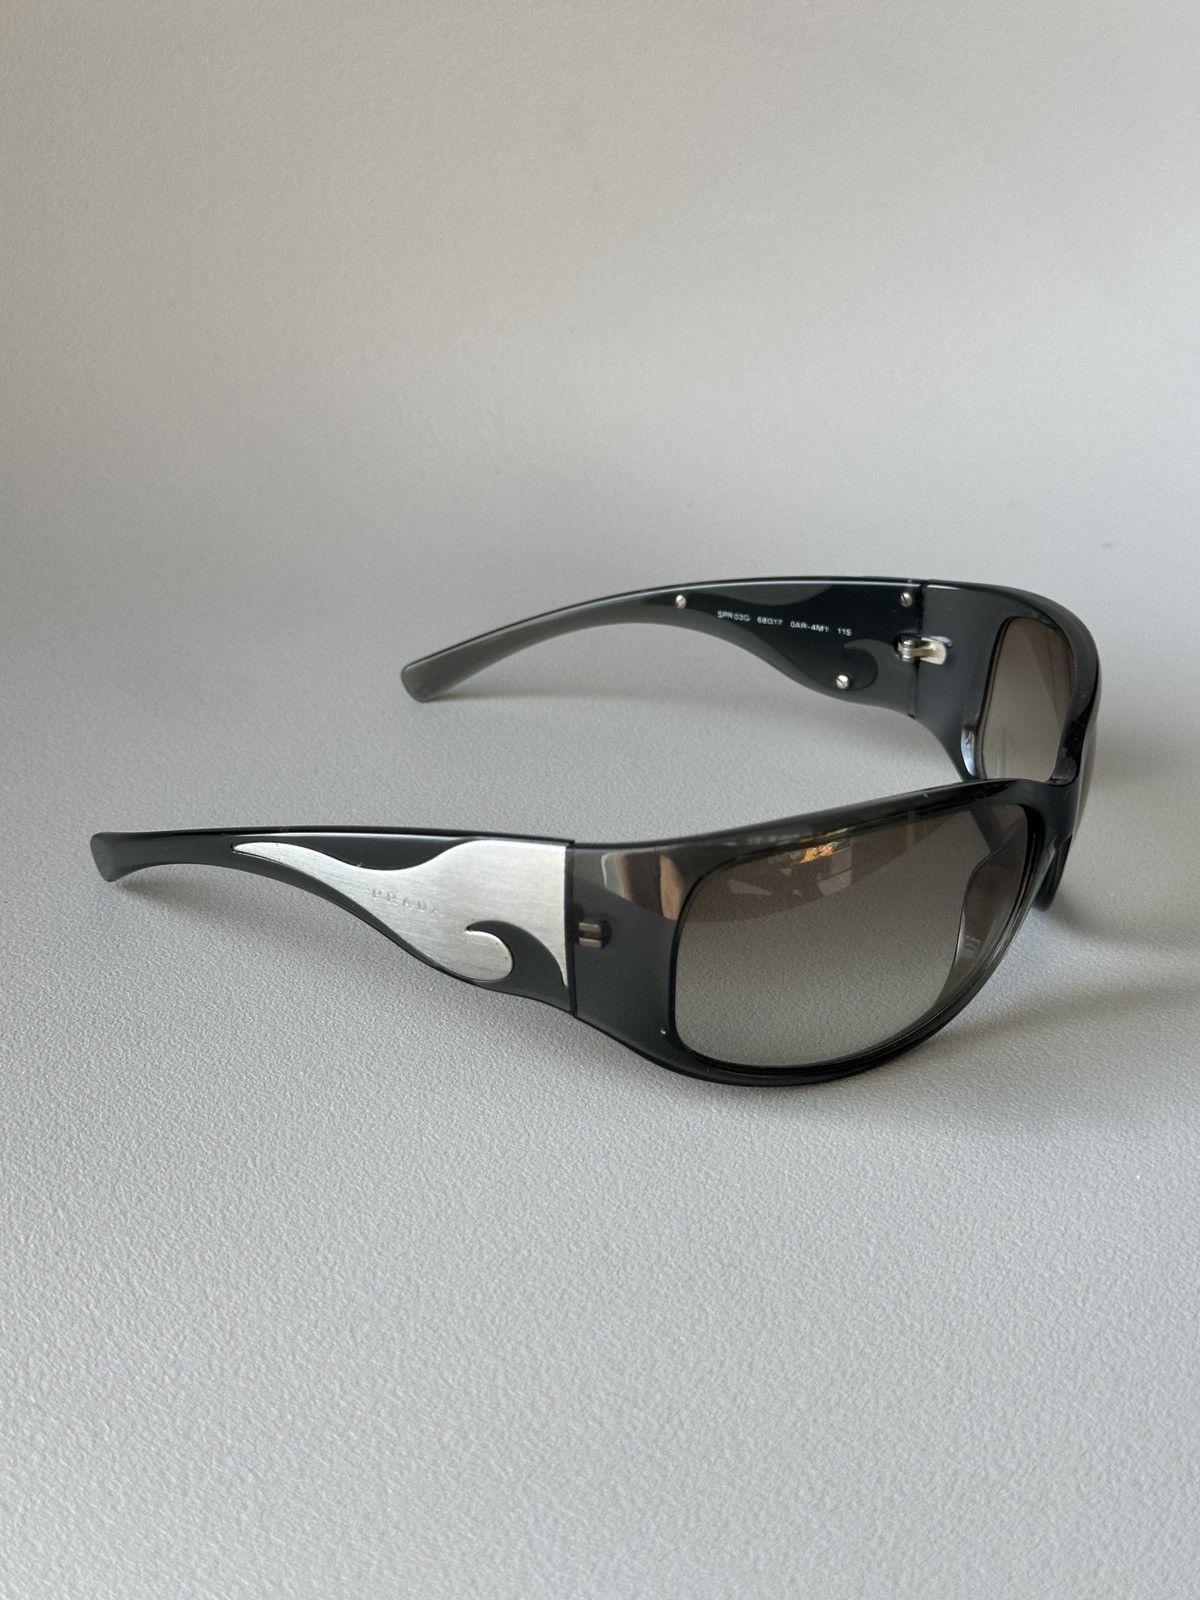 Pre-owned Prada X Vintage Prada Sunglasses Flames Spr 03g In Black Silver